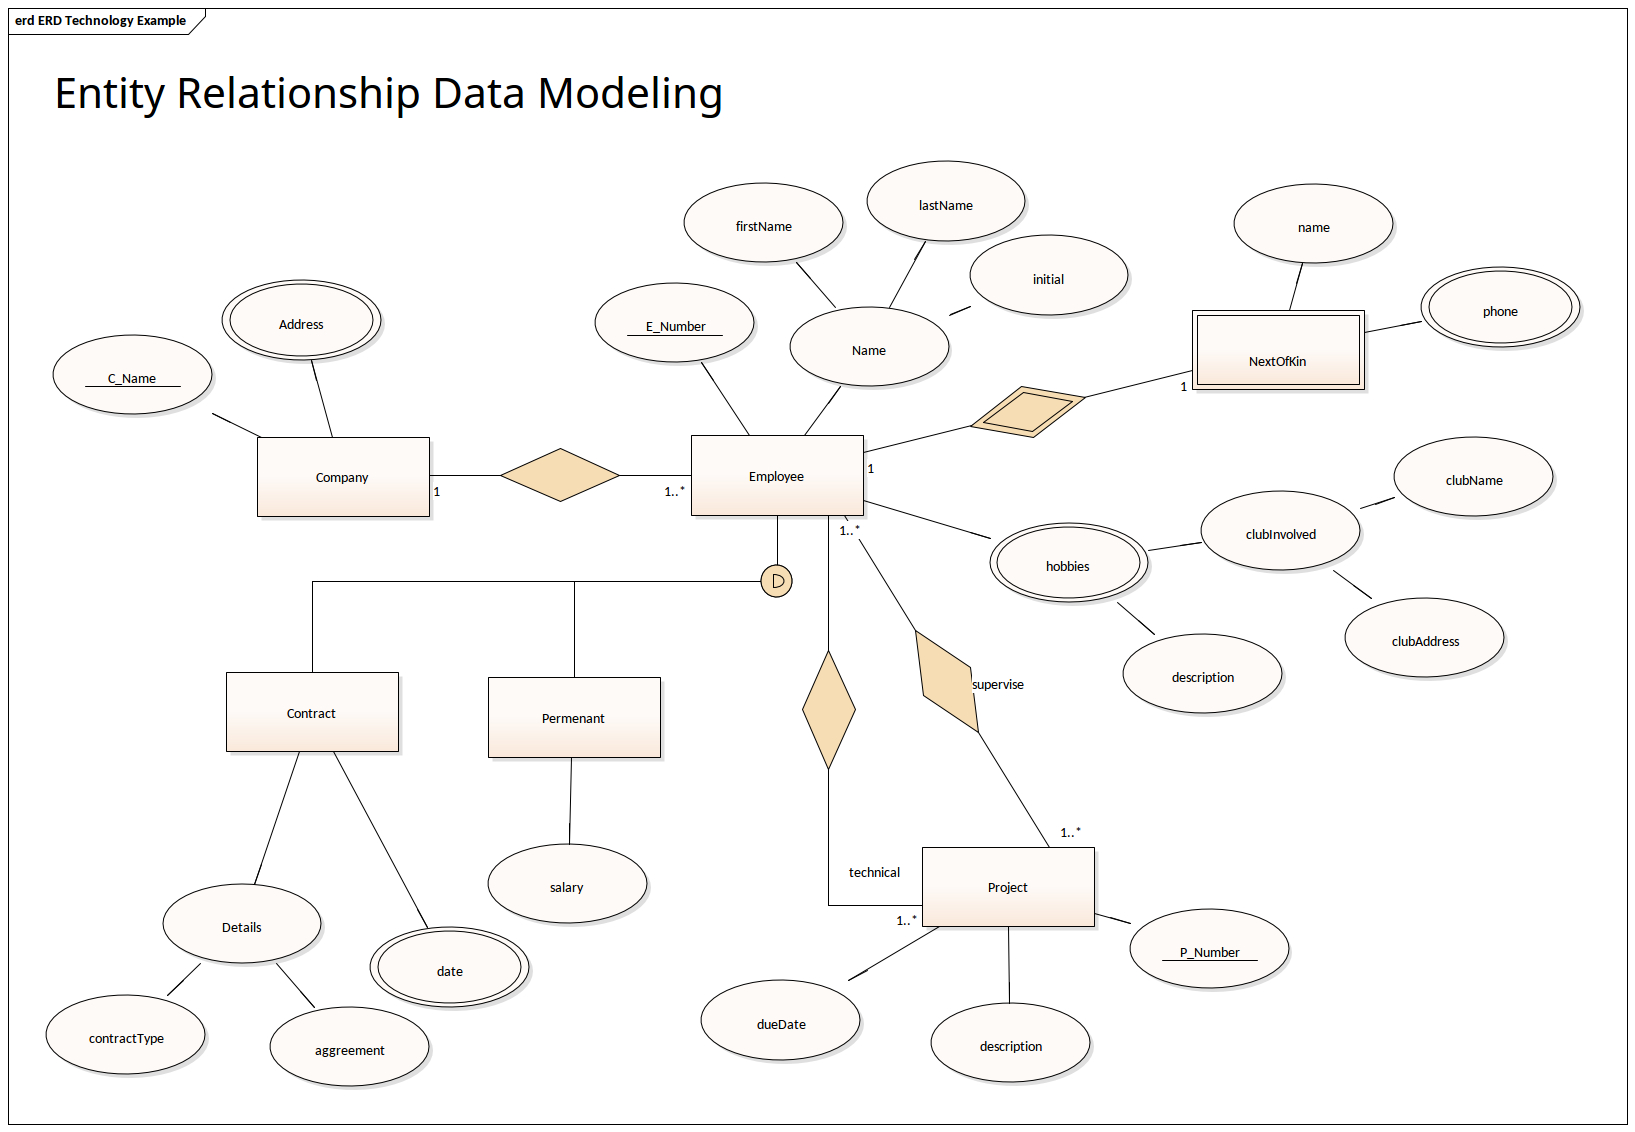 Entity Relationship Data Modeling | Enterprise Architect inside Data Modeling Using Entity Relationship Model